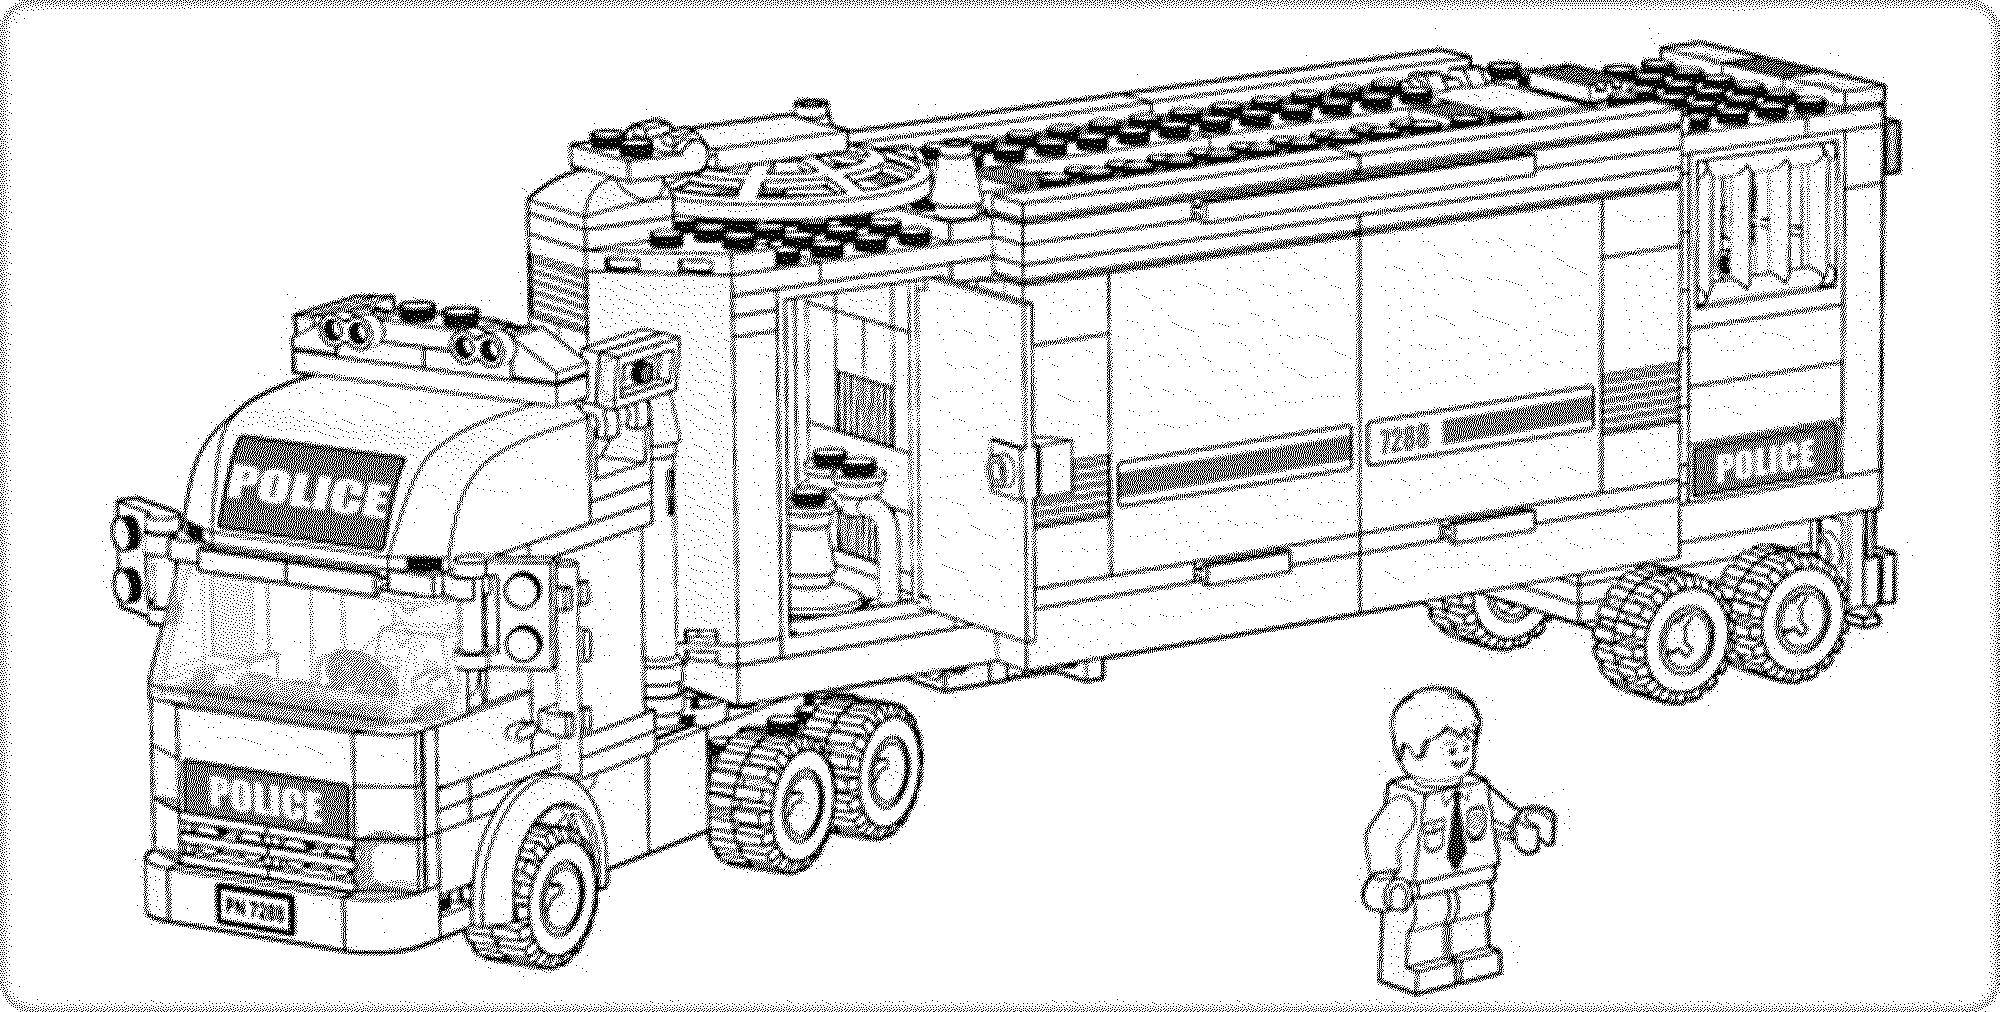 Название: Раскраска Полицейский грузовик. Категория: Лего. Теги: лего, рузовик, полиция.